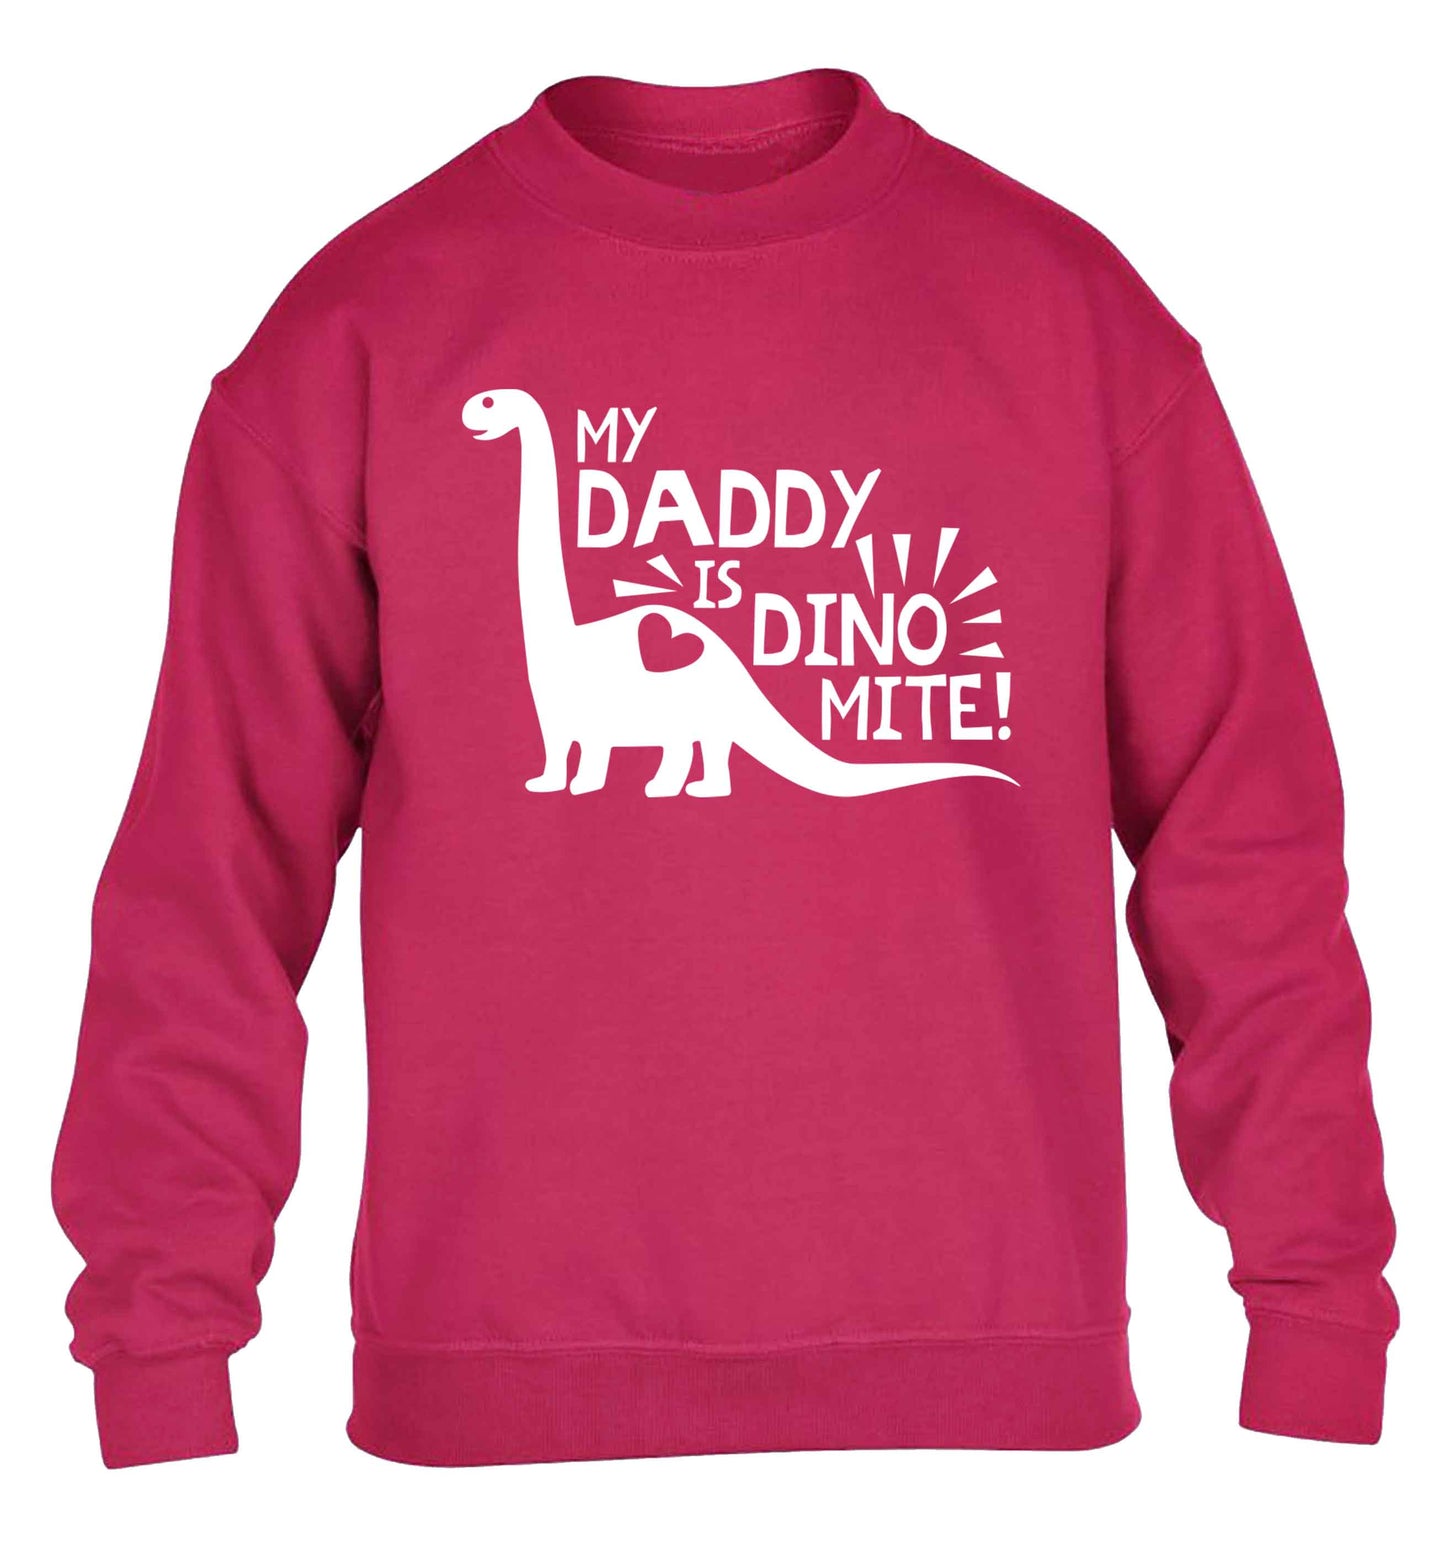 My daddy is dinomite! children's pink sweater 12-13 Years